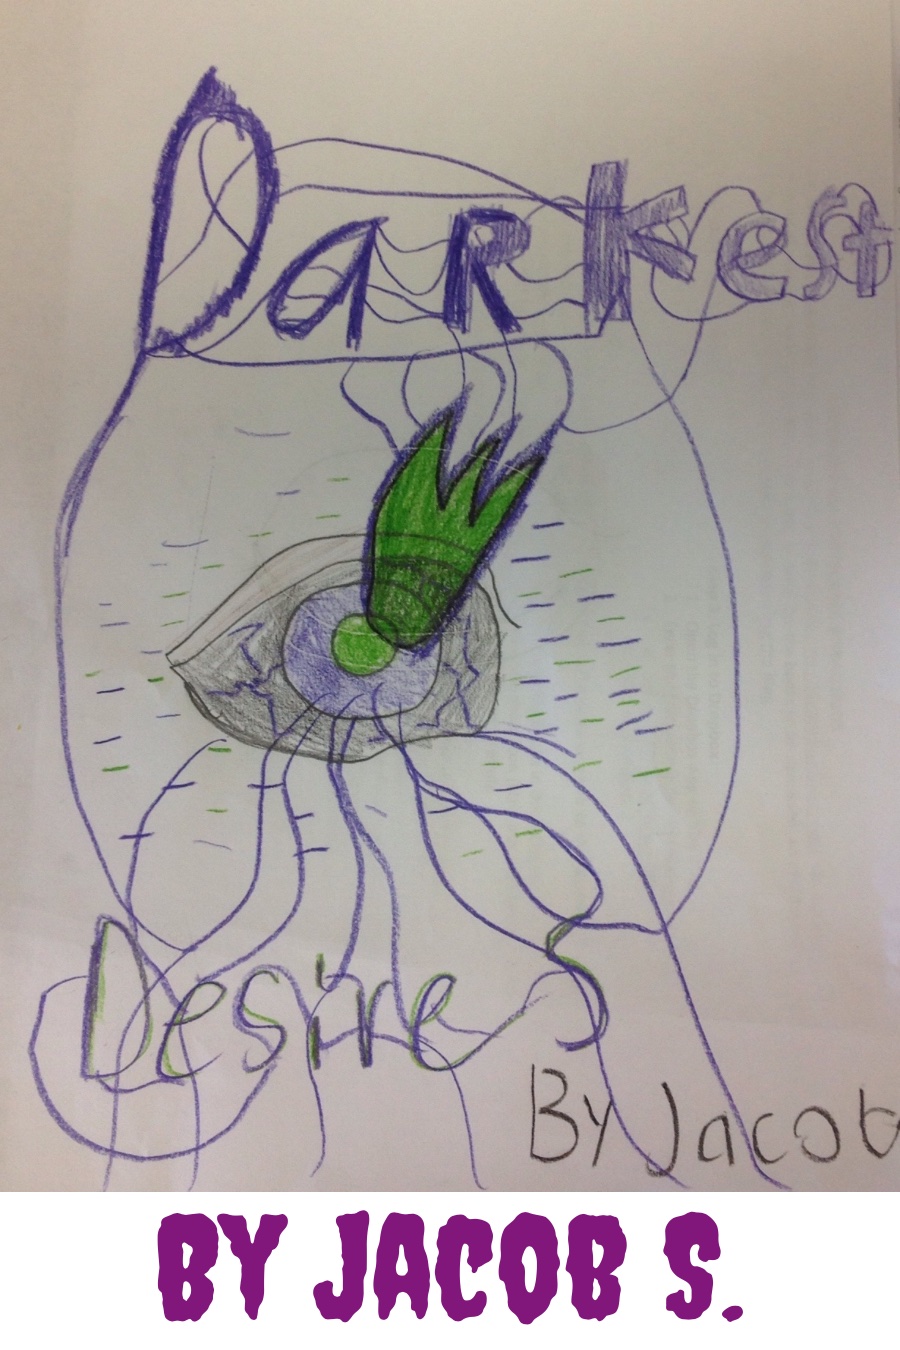 Darkest Desire by Jacob S